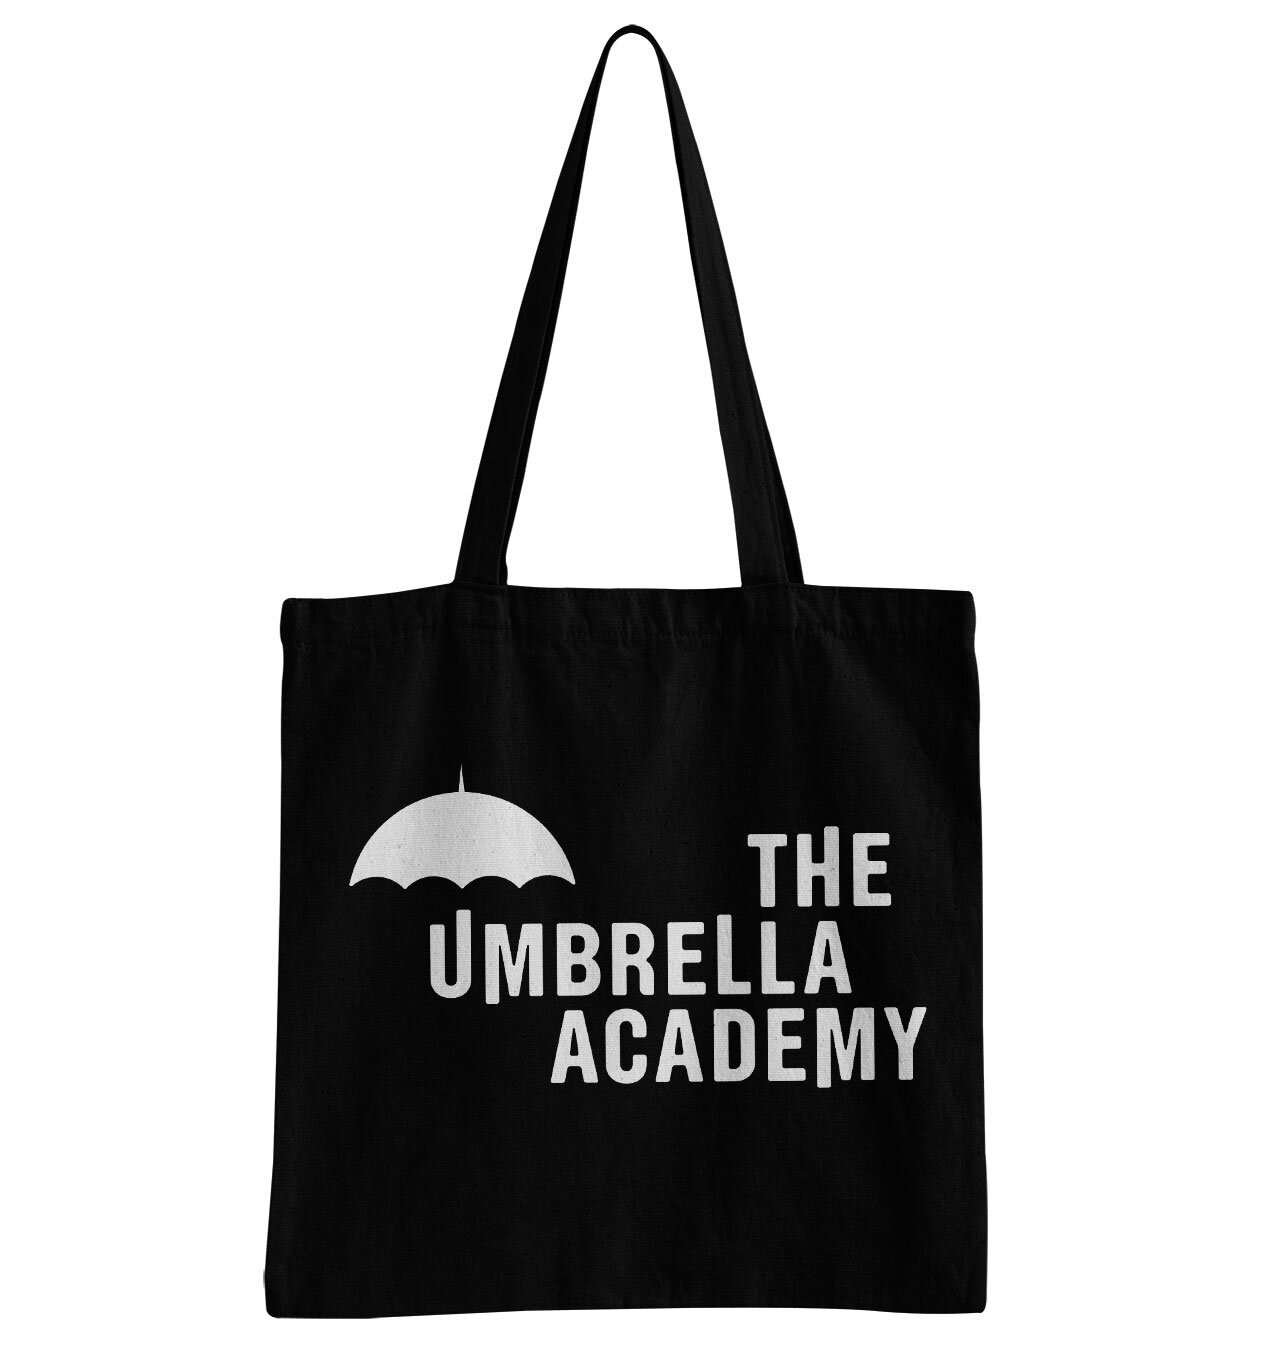 The Umbrella Academy Tote Bag